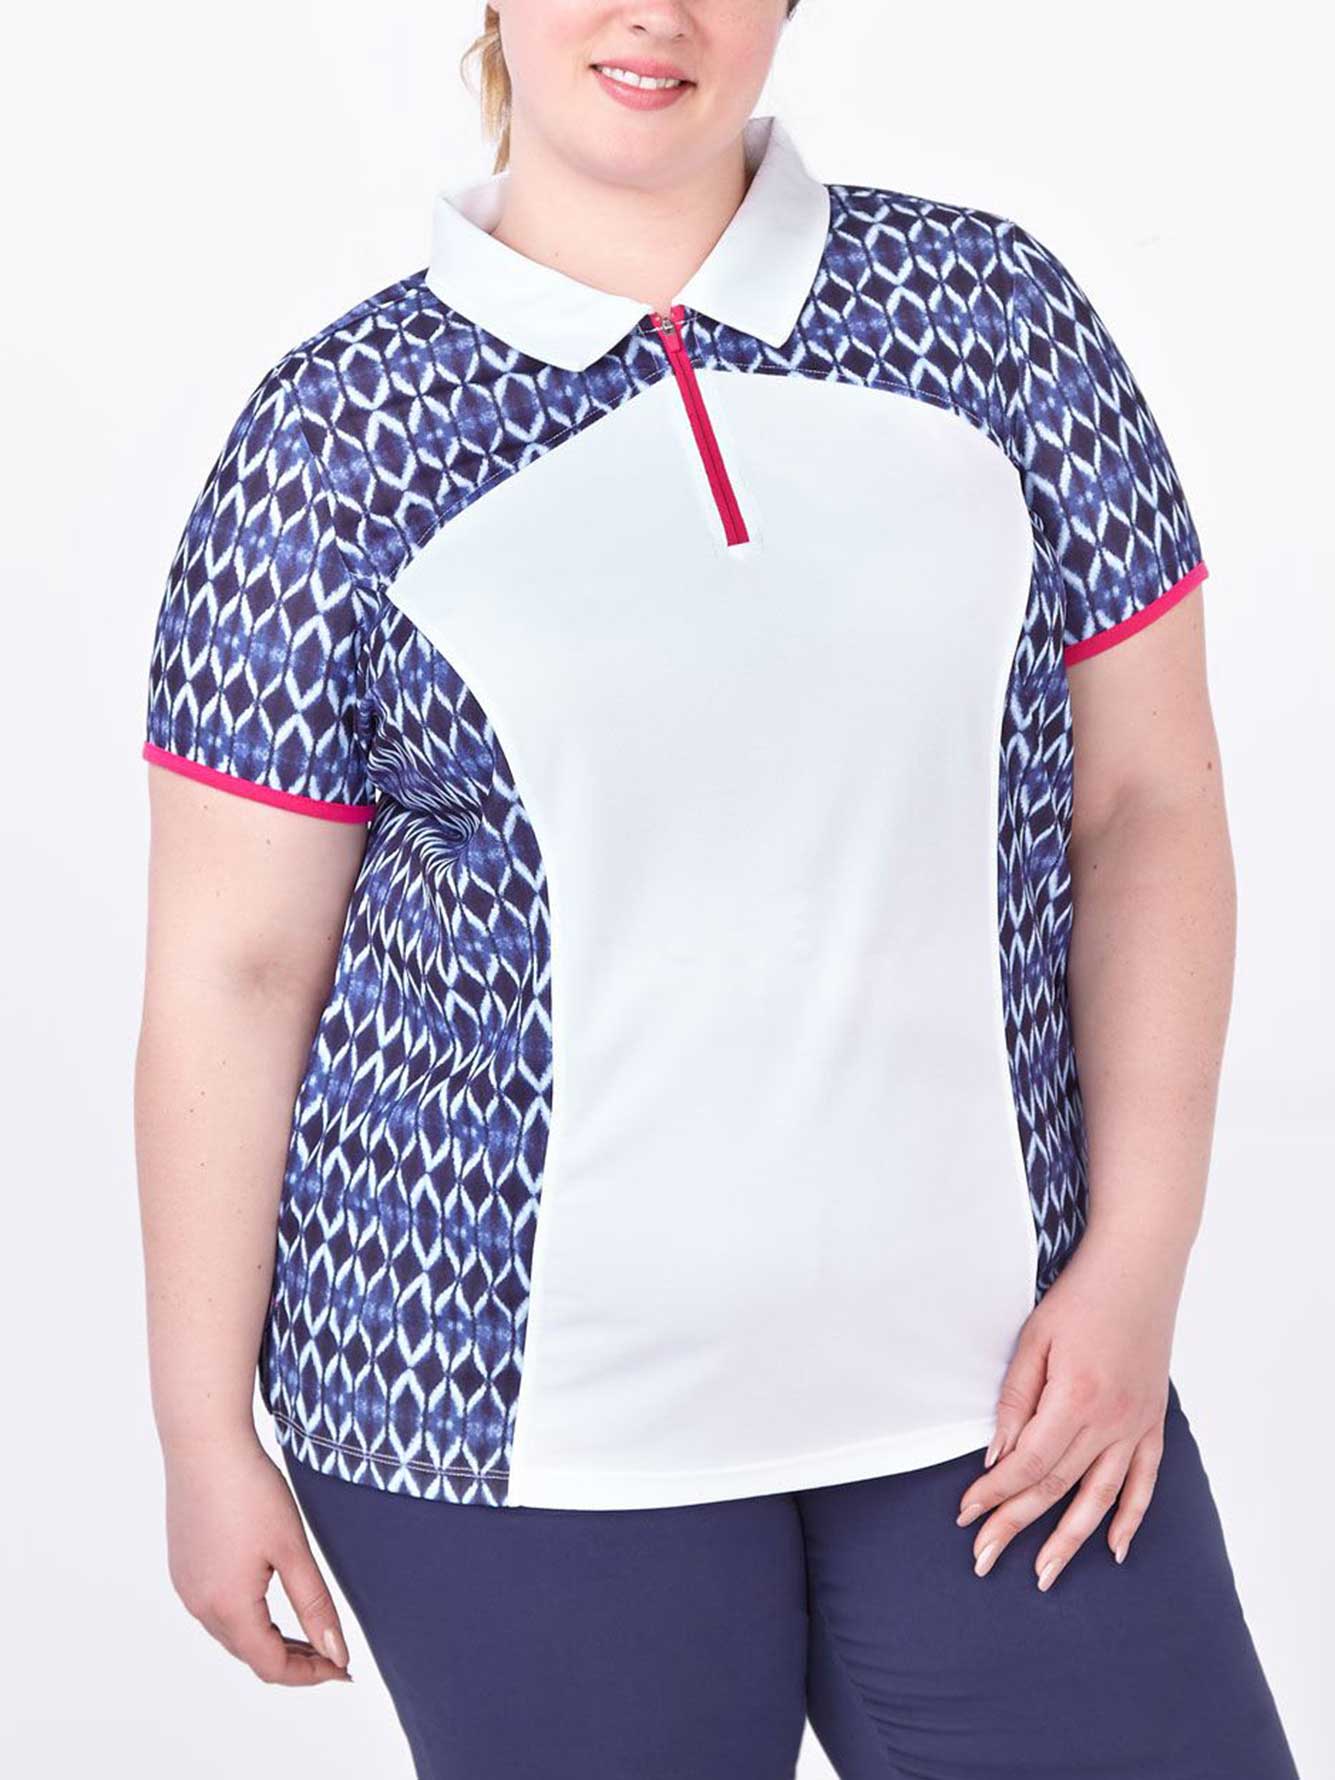 women's golf shirts plus size